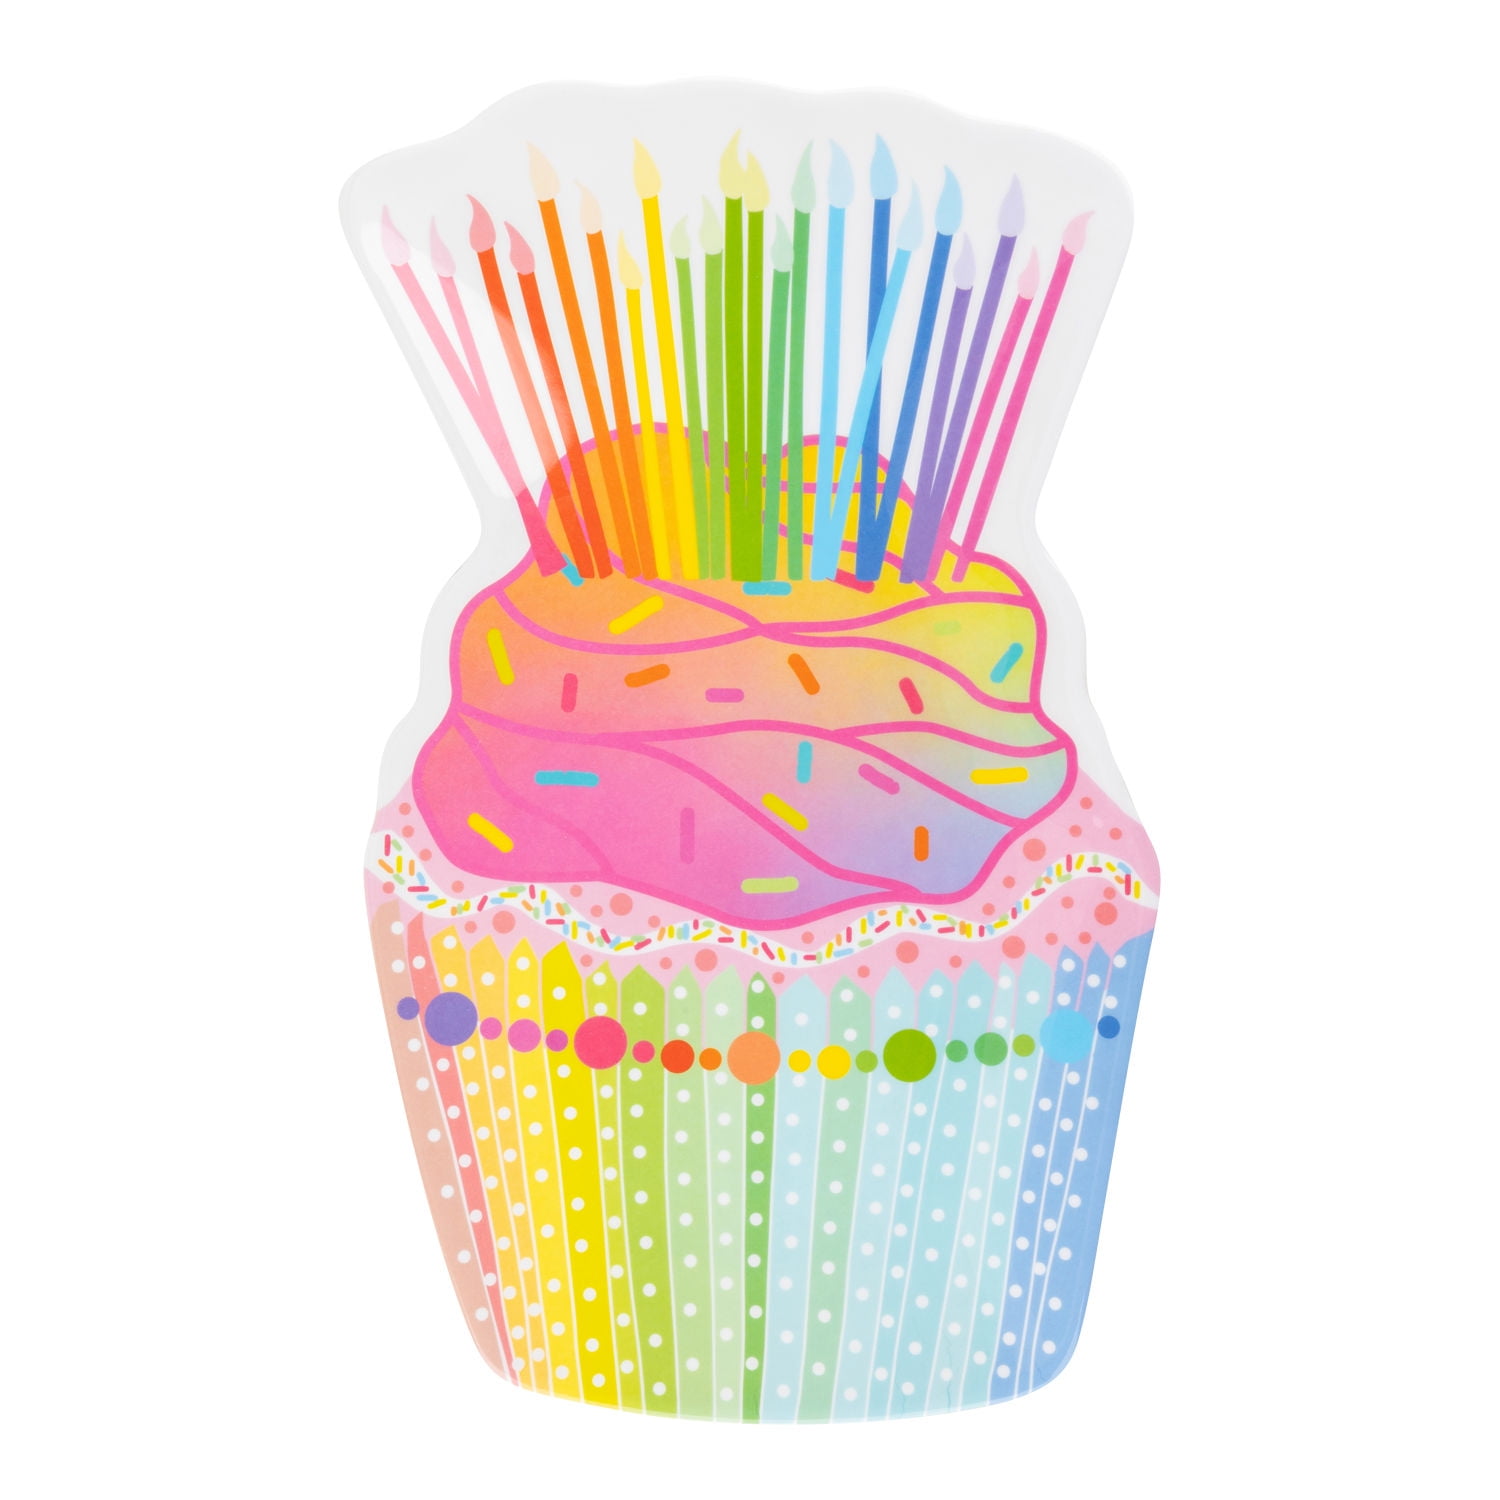 Stricly Fancy Multicolor Melamine Cupcake Tray, 1 Piece